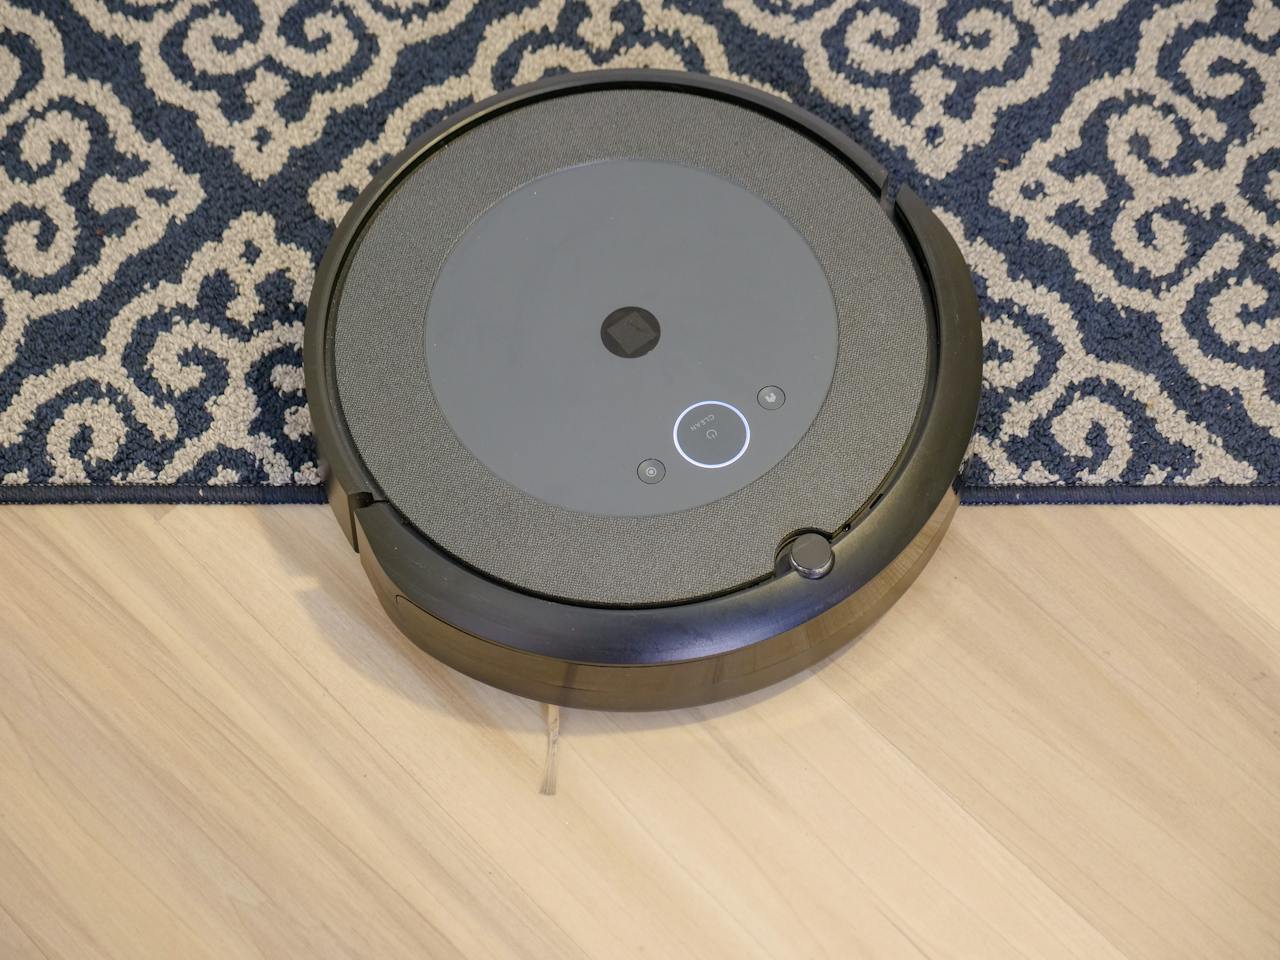 Roomba E5